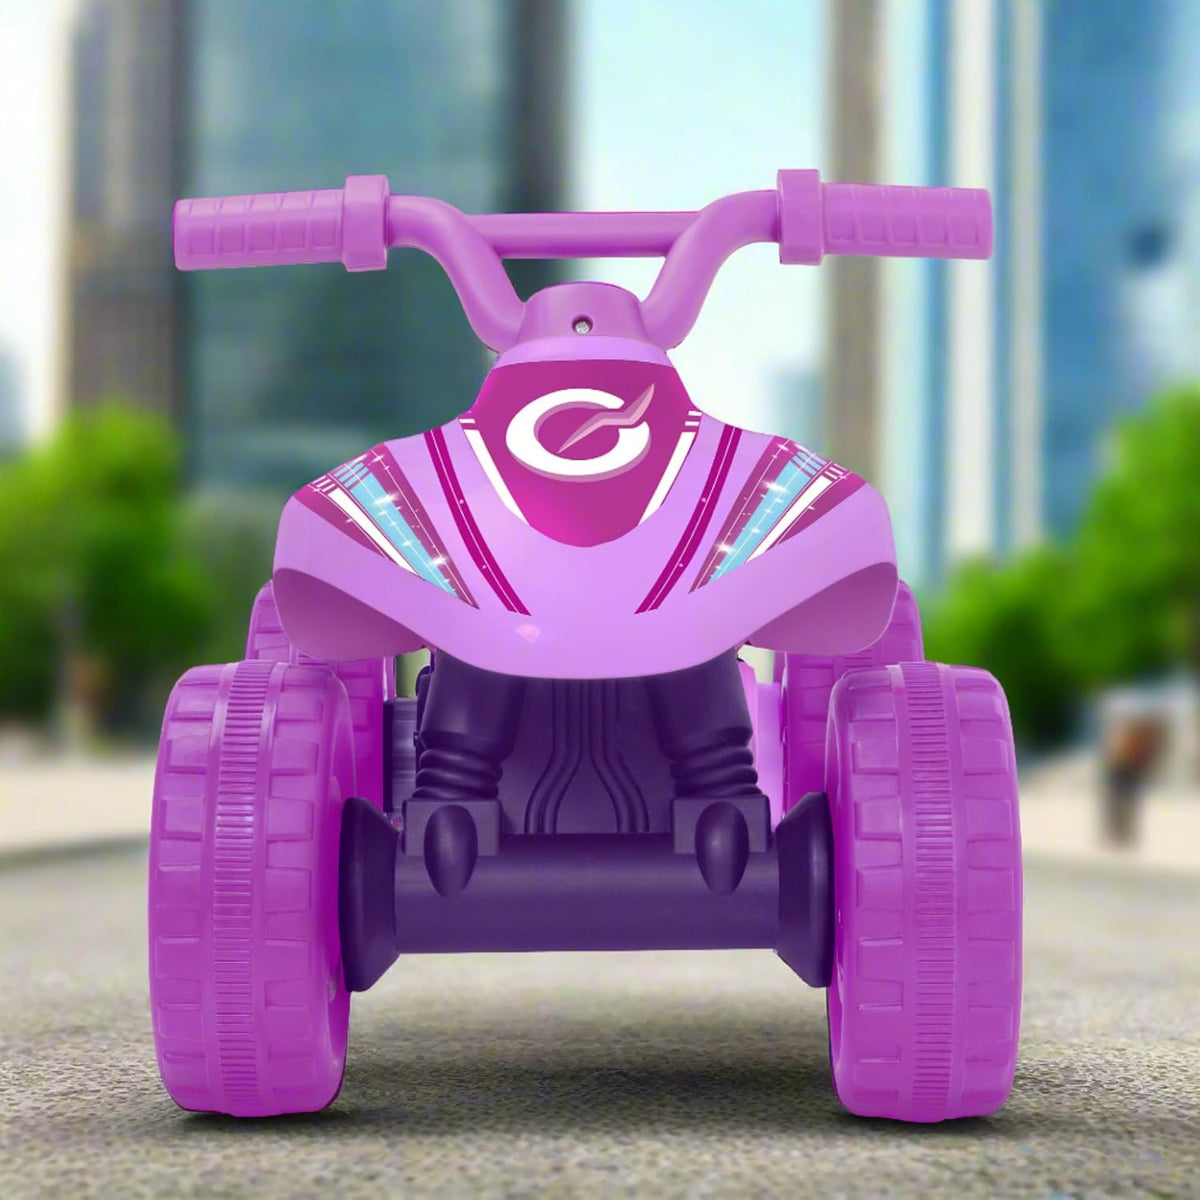 Evo 6V Kids Electric Ride On | Pink Shimmer Mini Quad